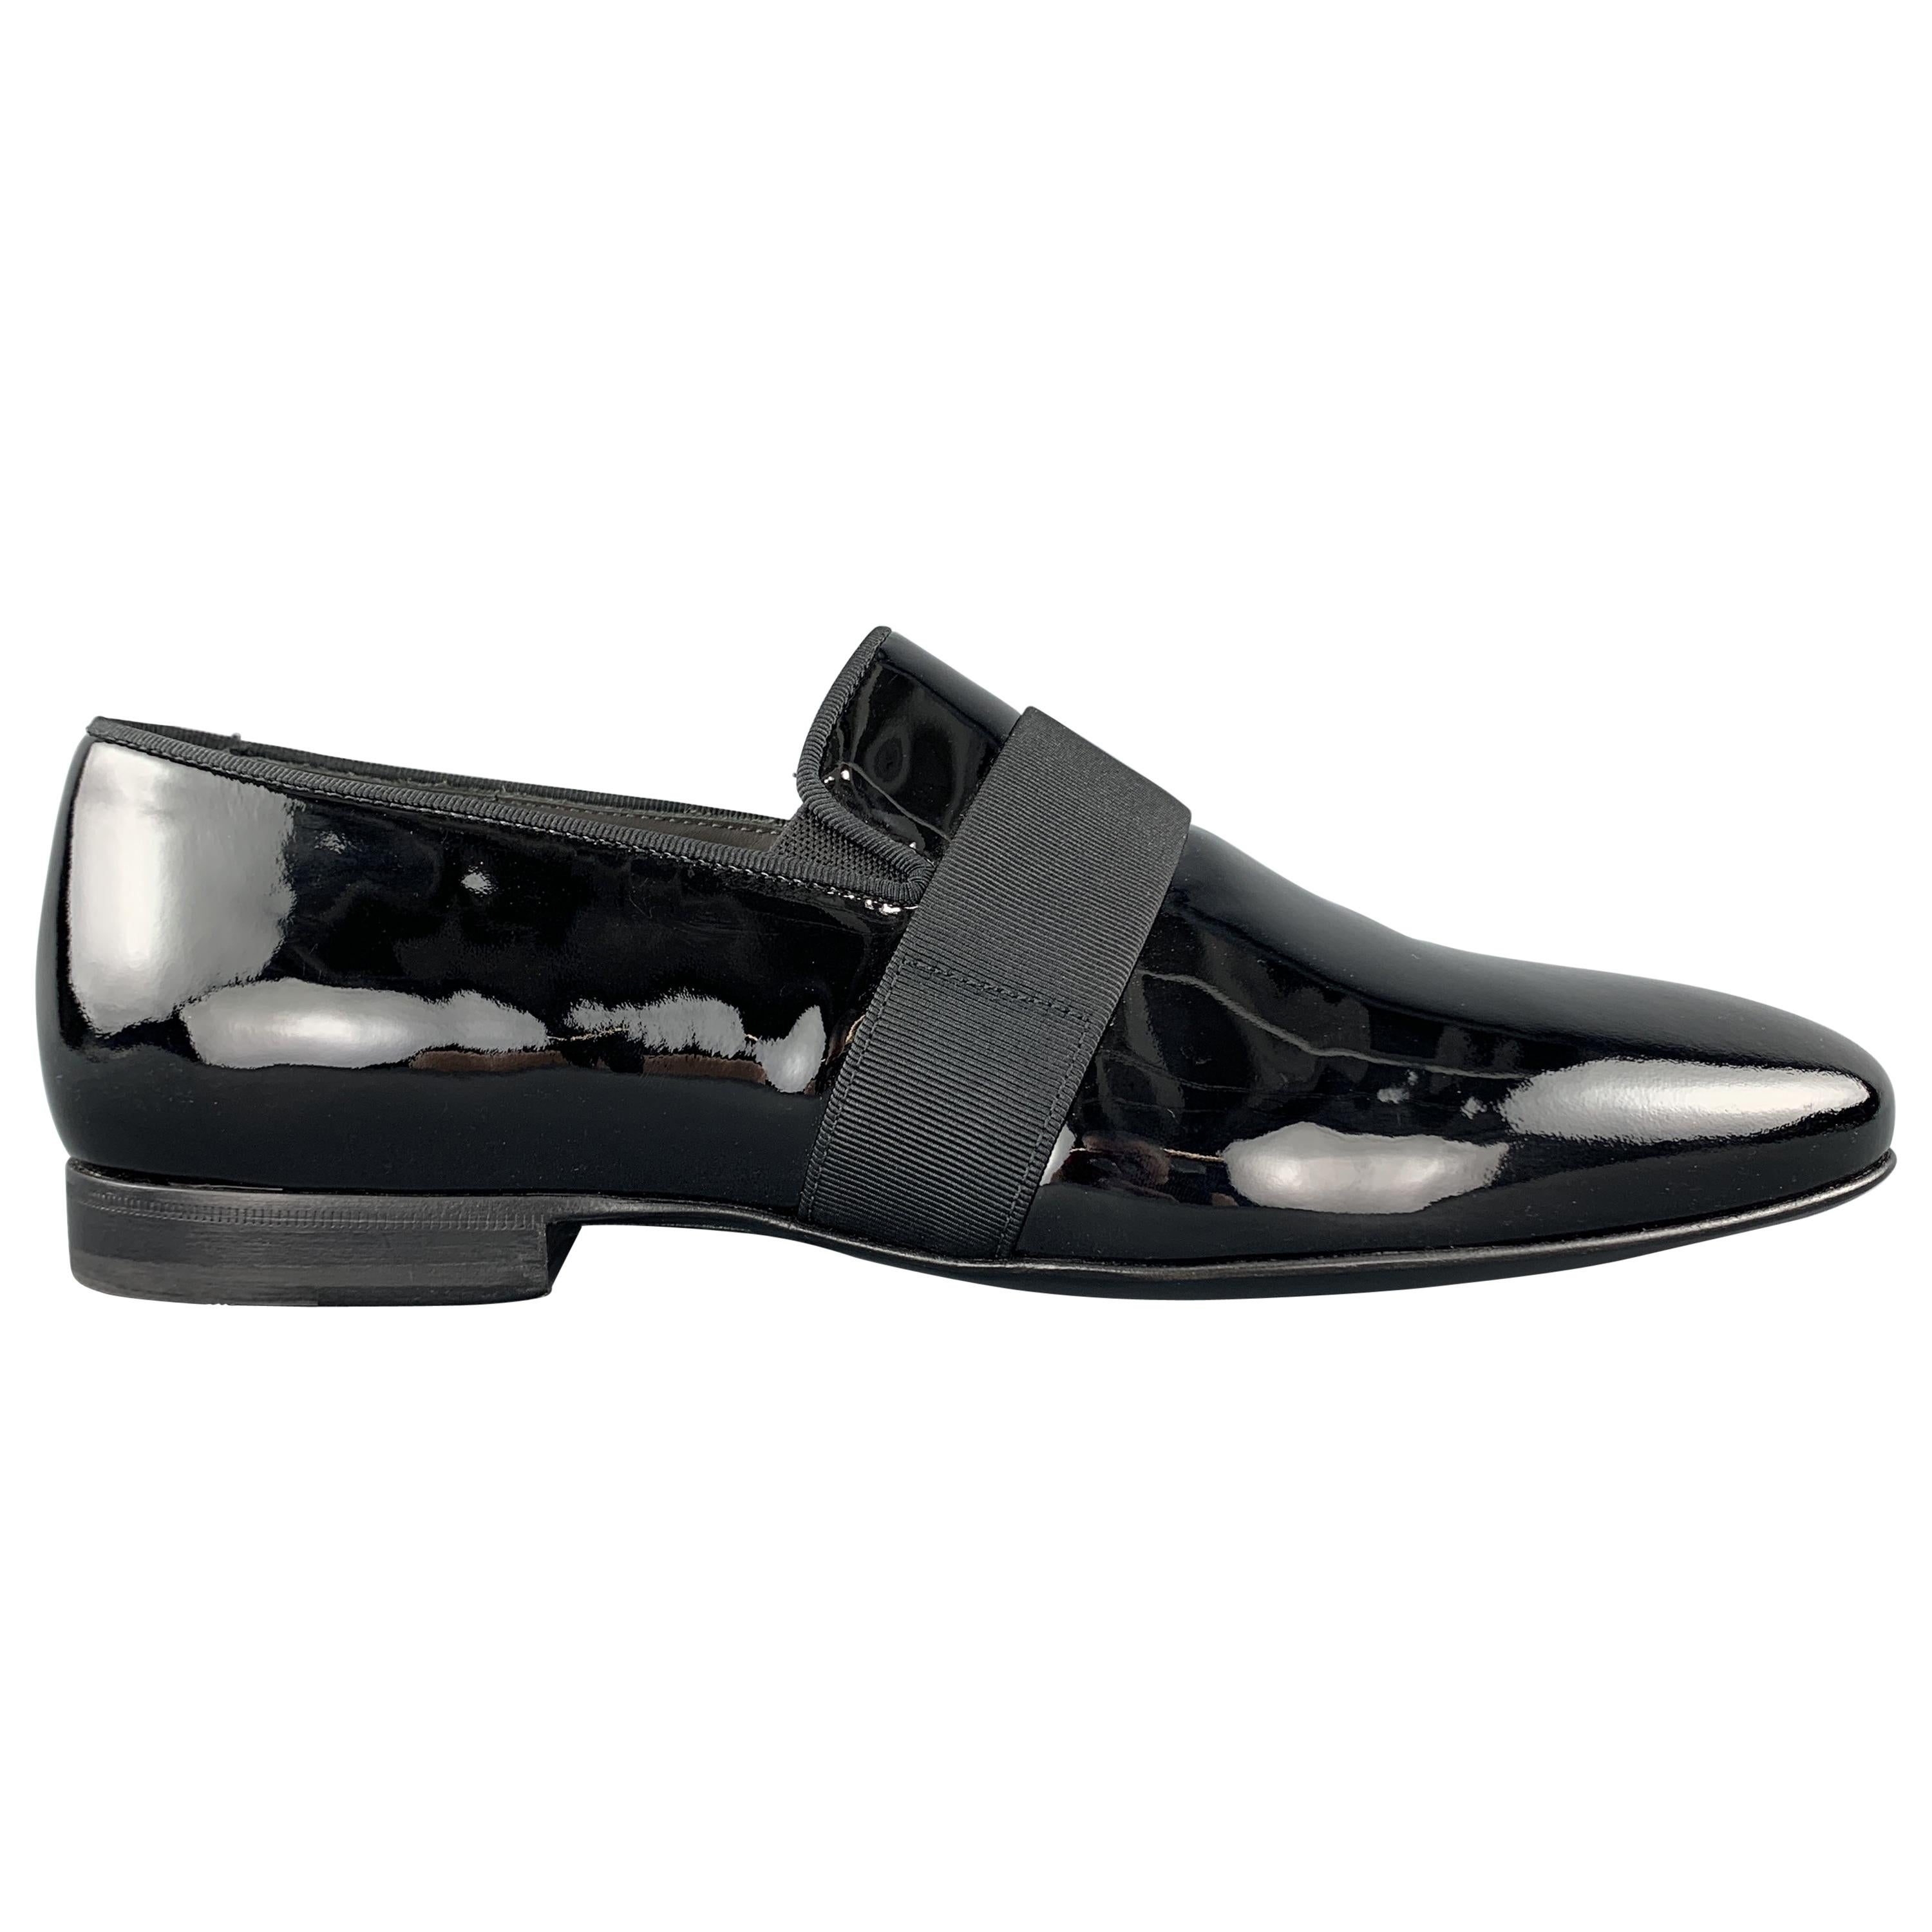 LANVIN Size 10 Black Patent Leather Tuxedo Slipper Loafers